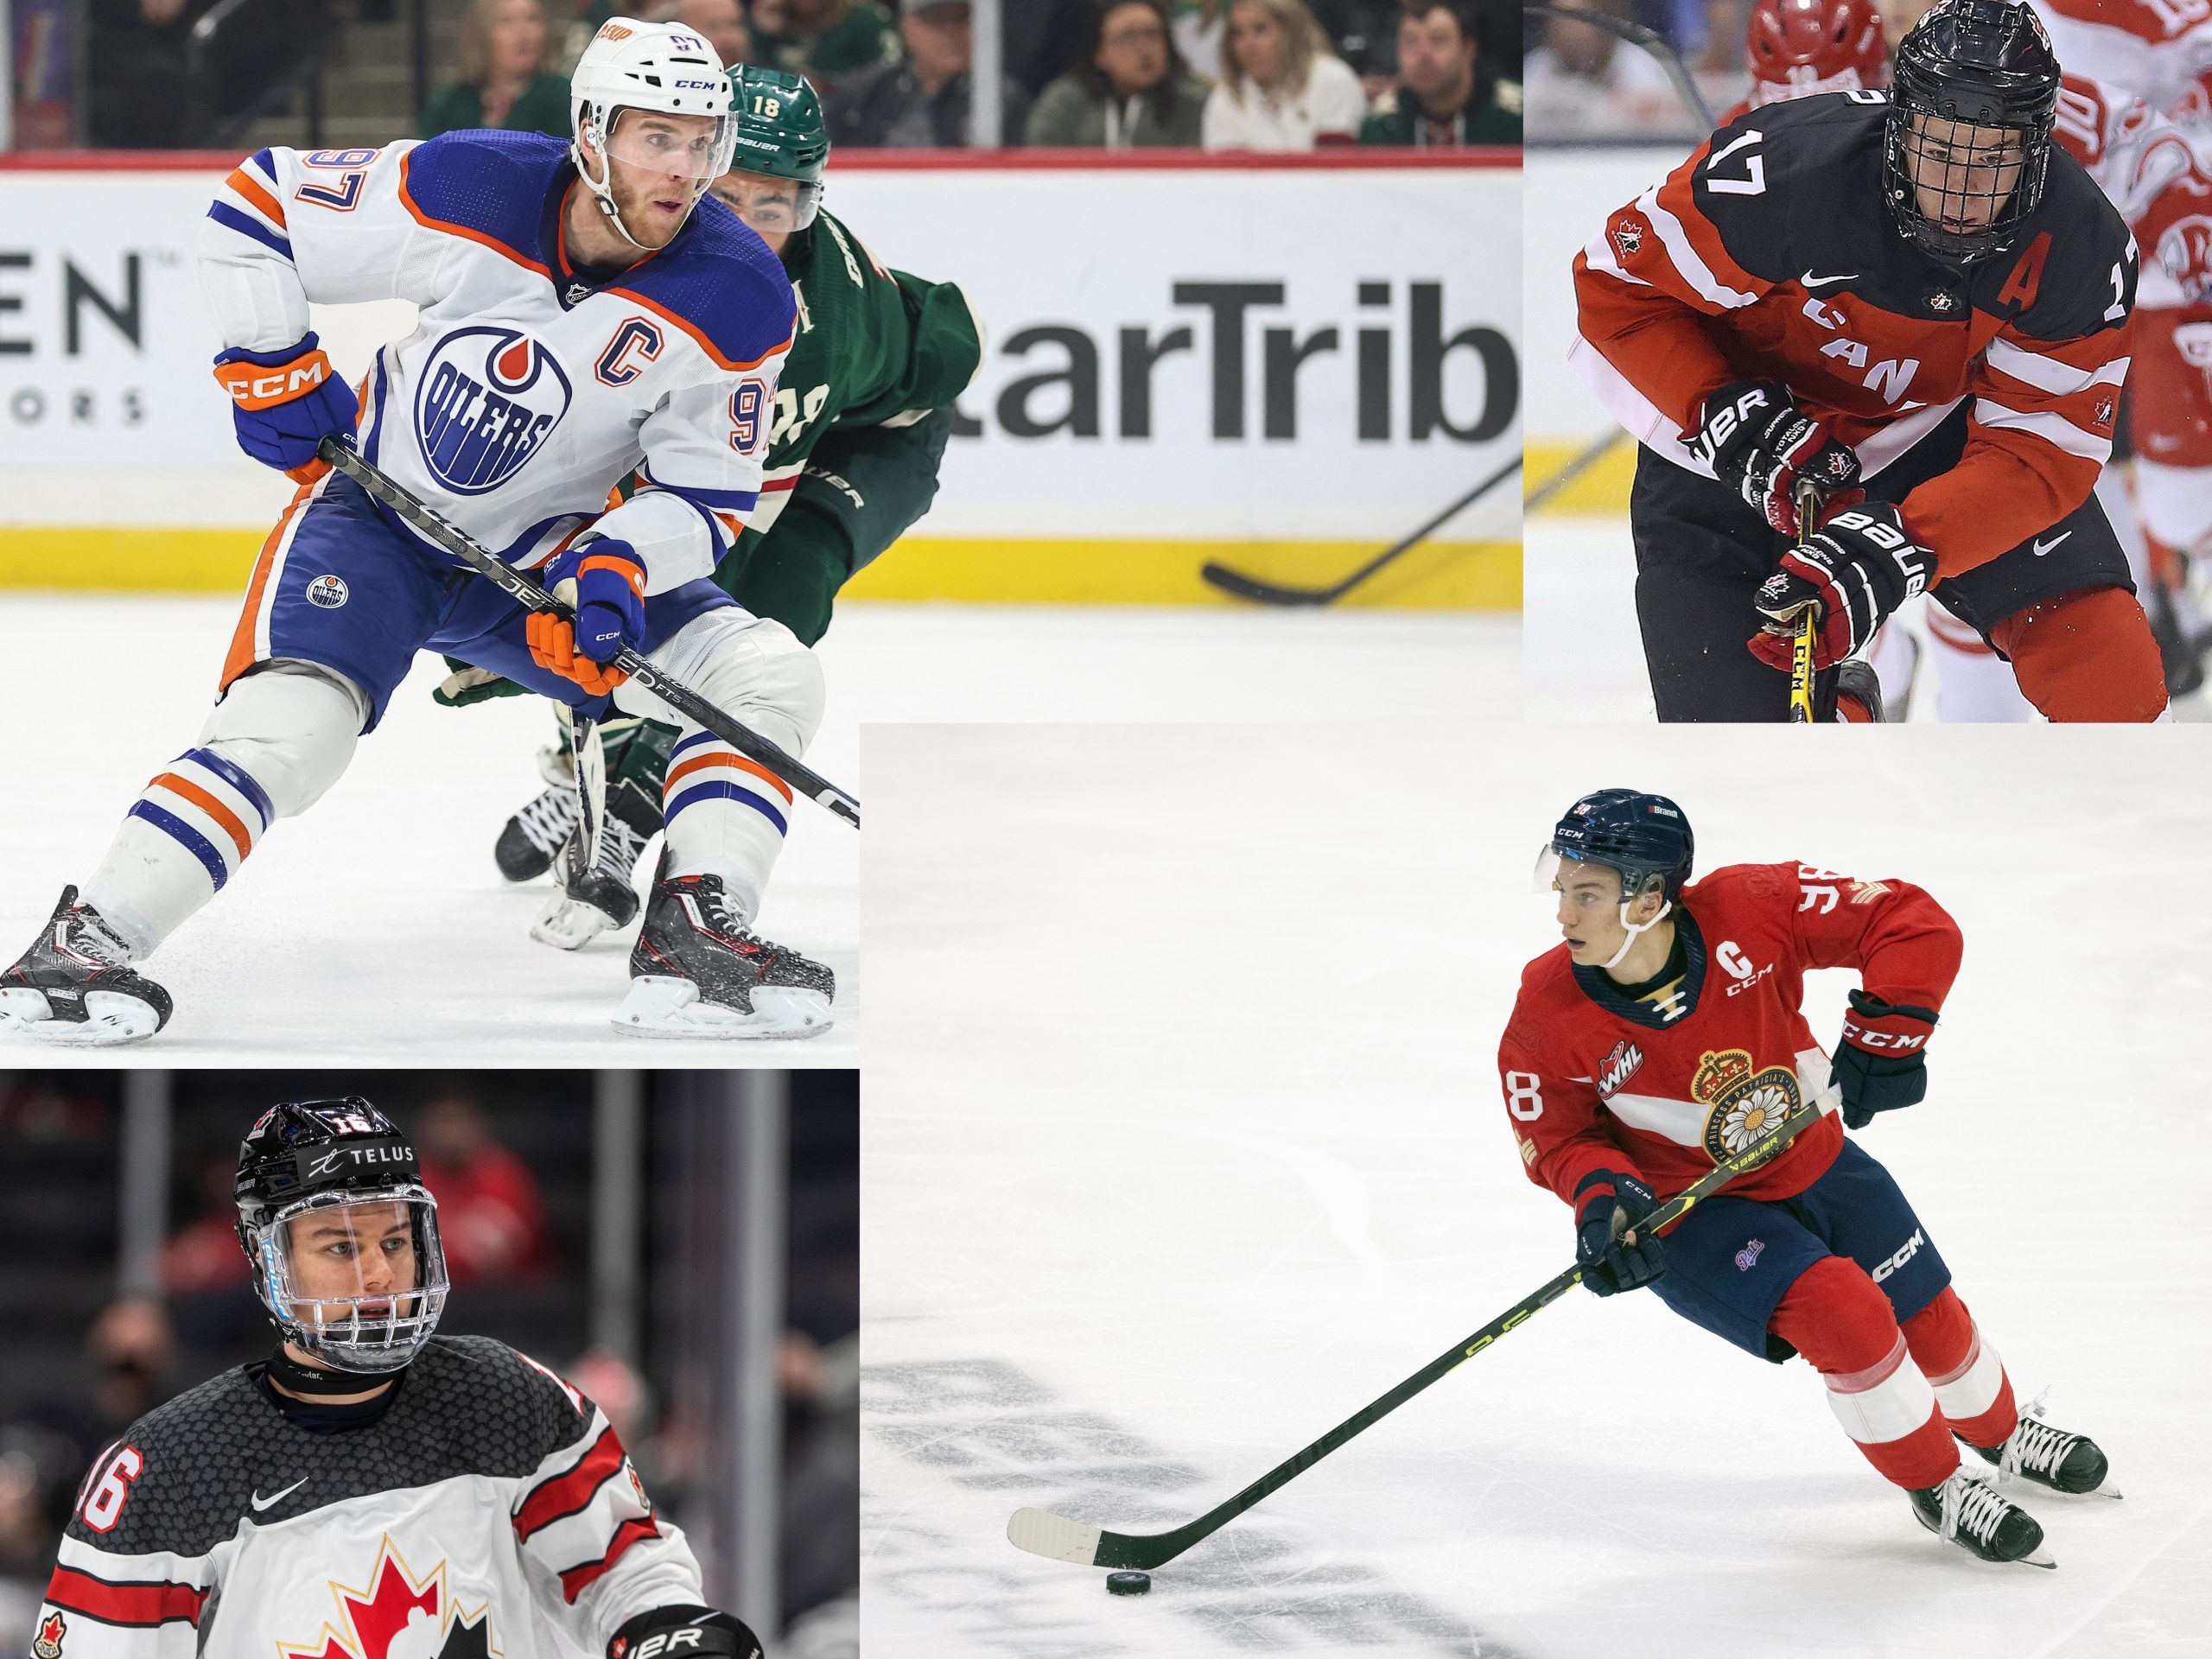 Ice Hockey-Bedard skates into NHL spotlight as new season begins